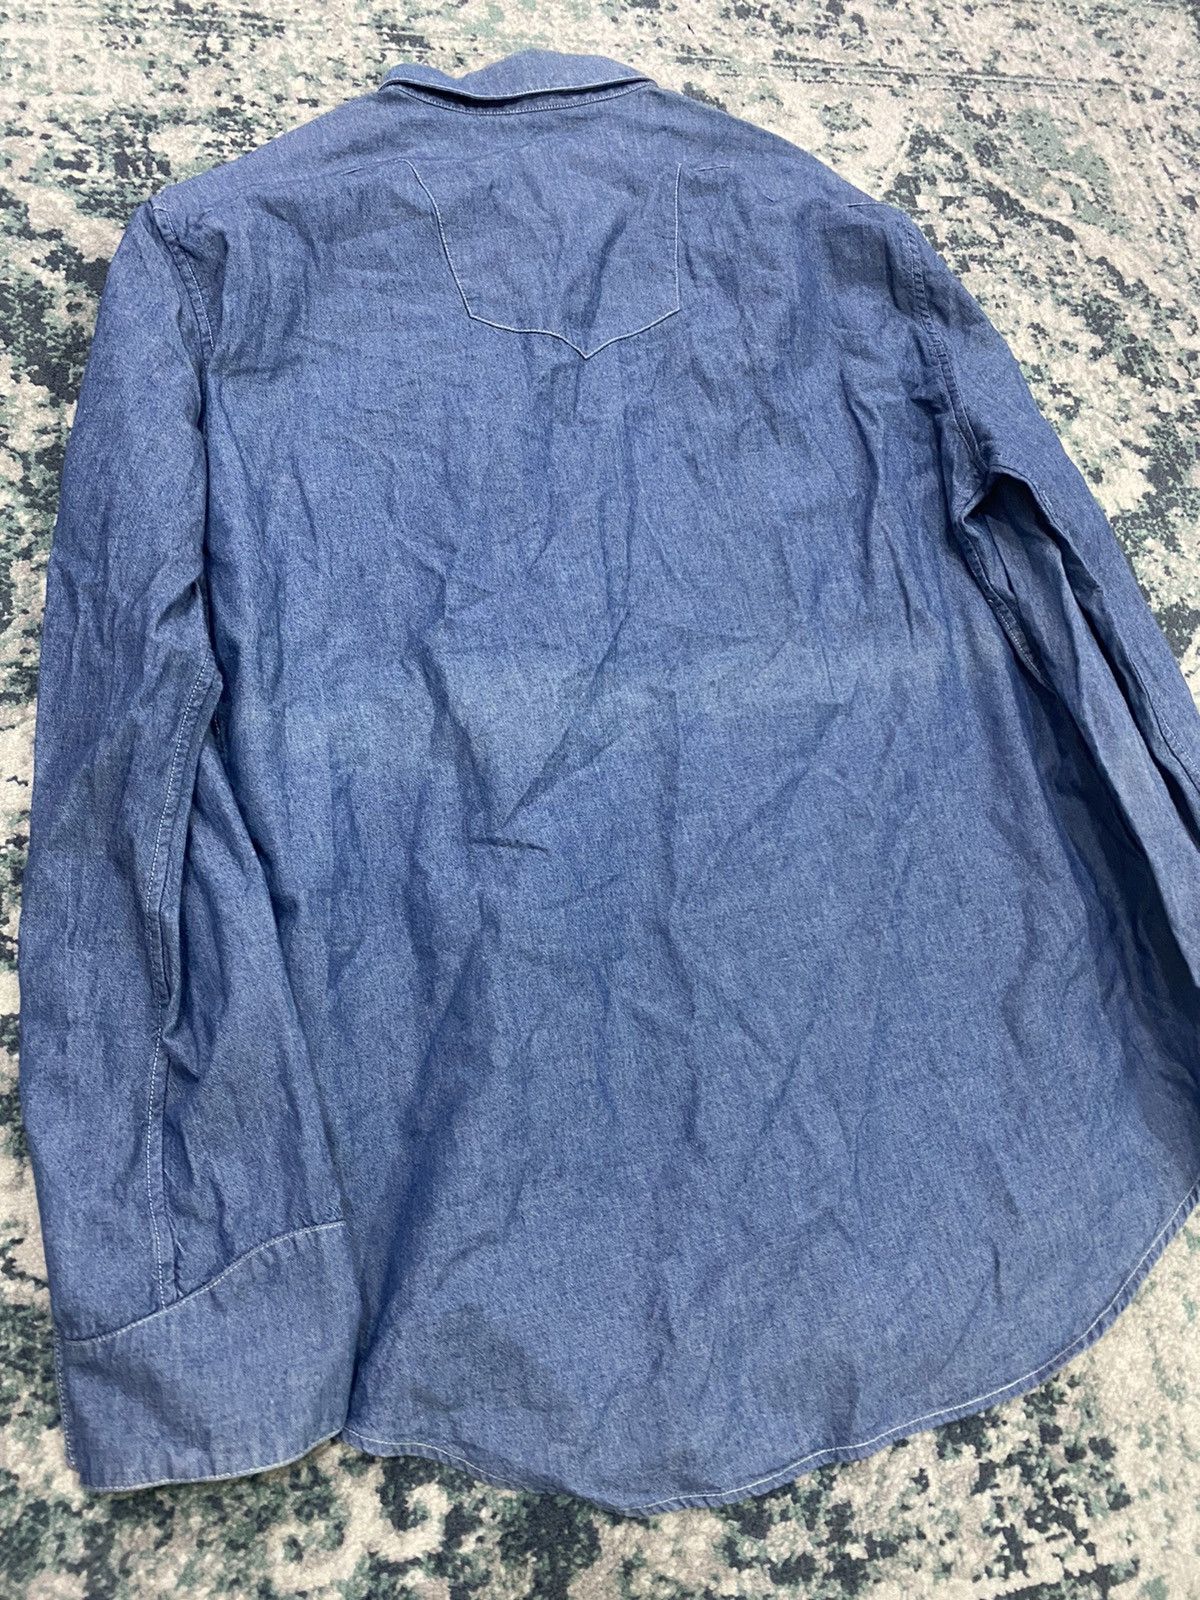 AW09 Balenciaga Paris Faded Hidden Pocket Denim Shirt - 15